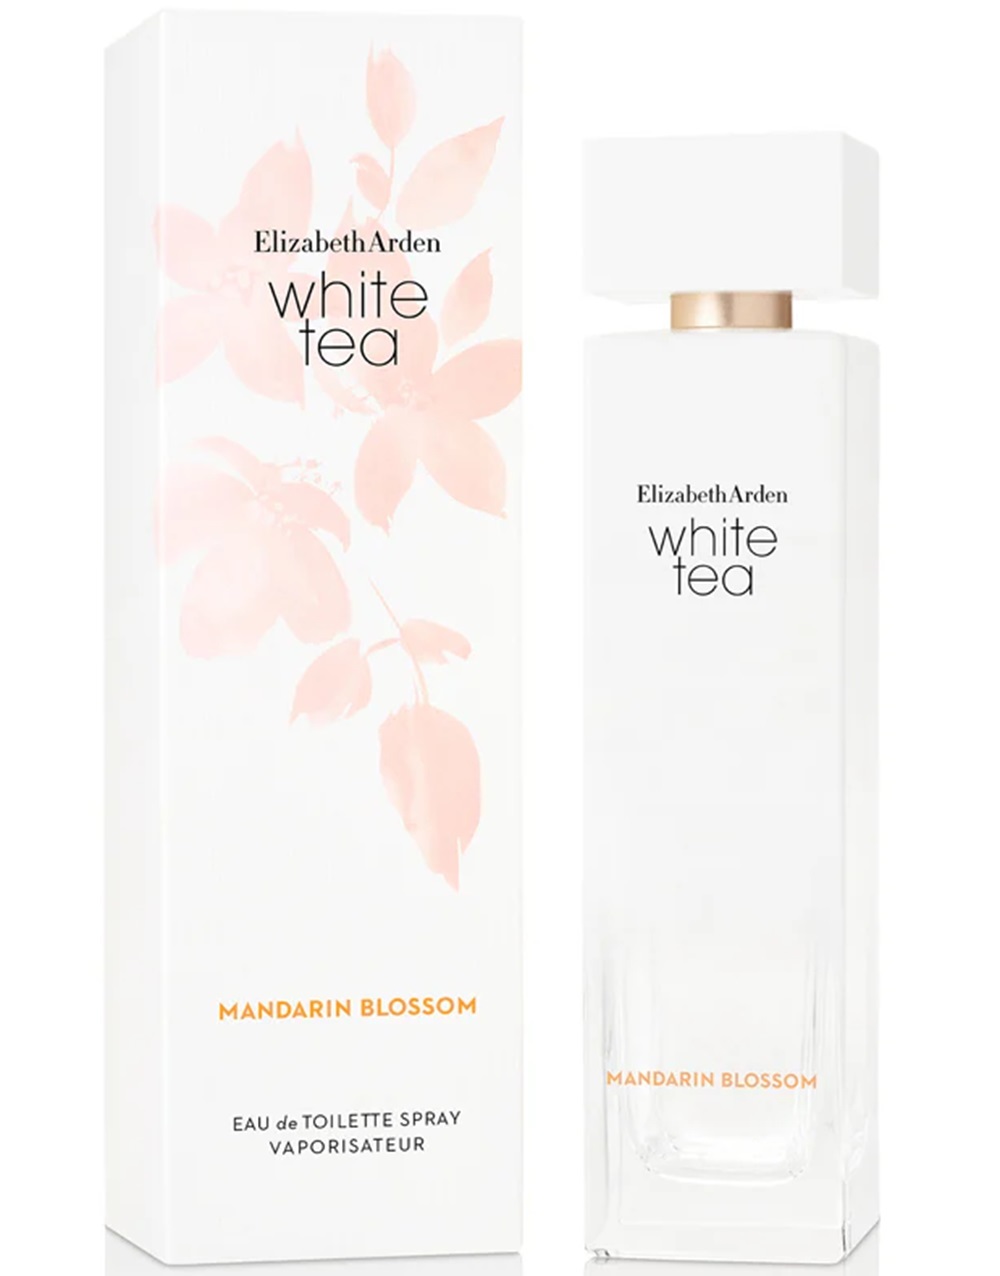 WHITE TEA MANDARIN BLOSSOM * Elizabeth Arden 3.4 oz / 100 ml EDT Women Perfume - $36.45